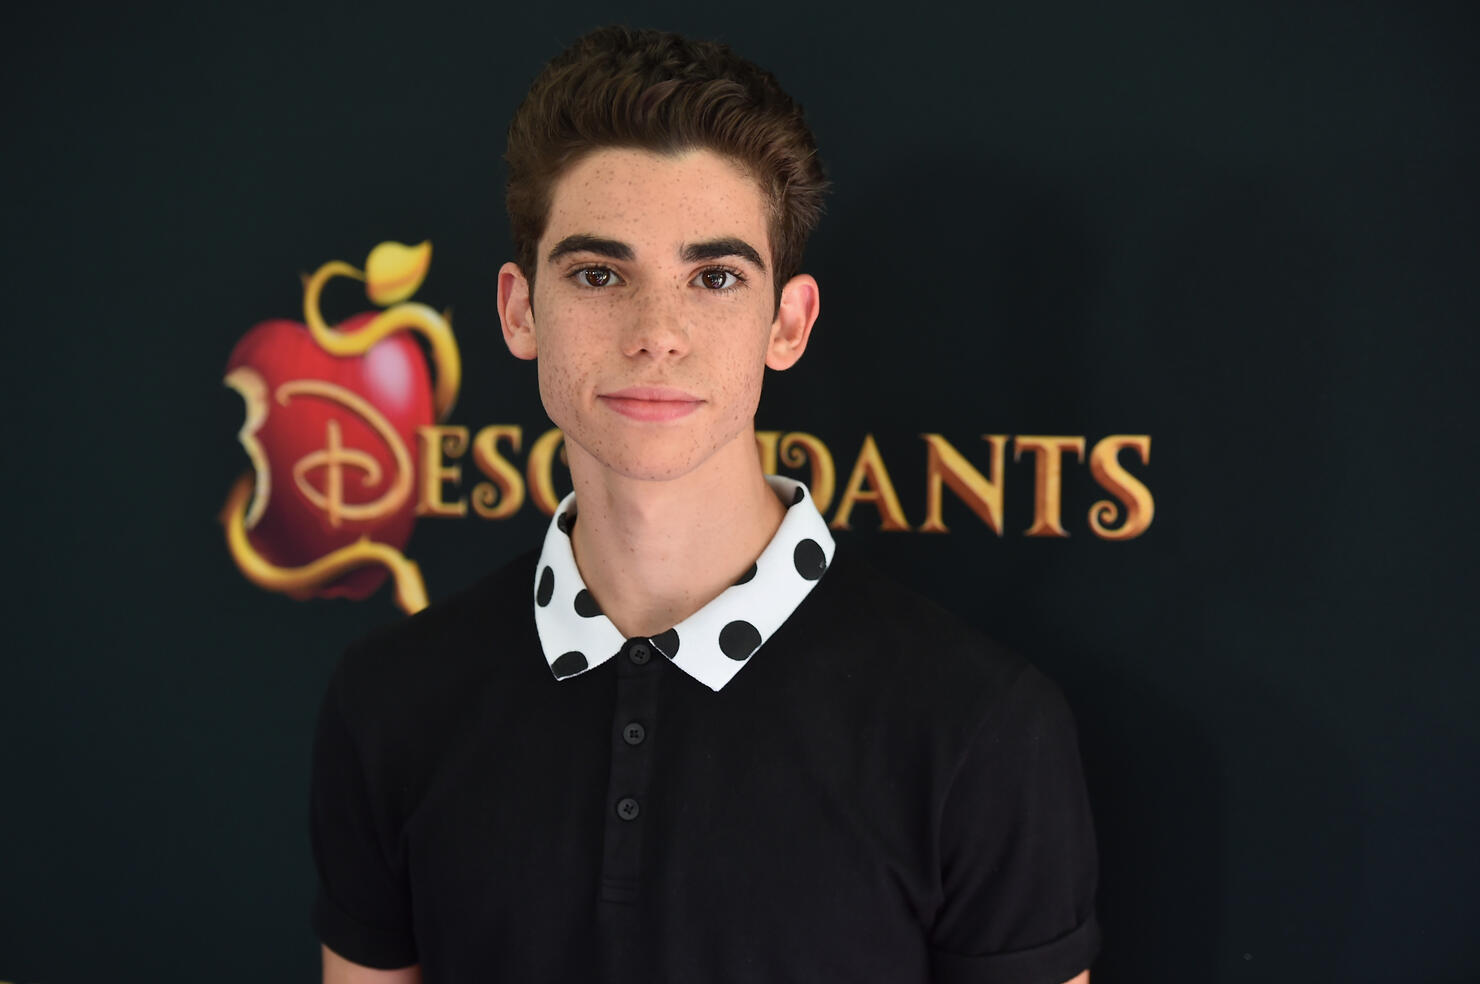 Premiere Of Disney's "Descendants" - Red Carpet